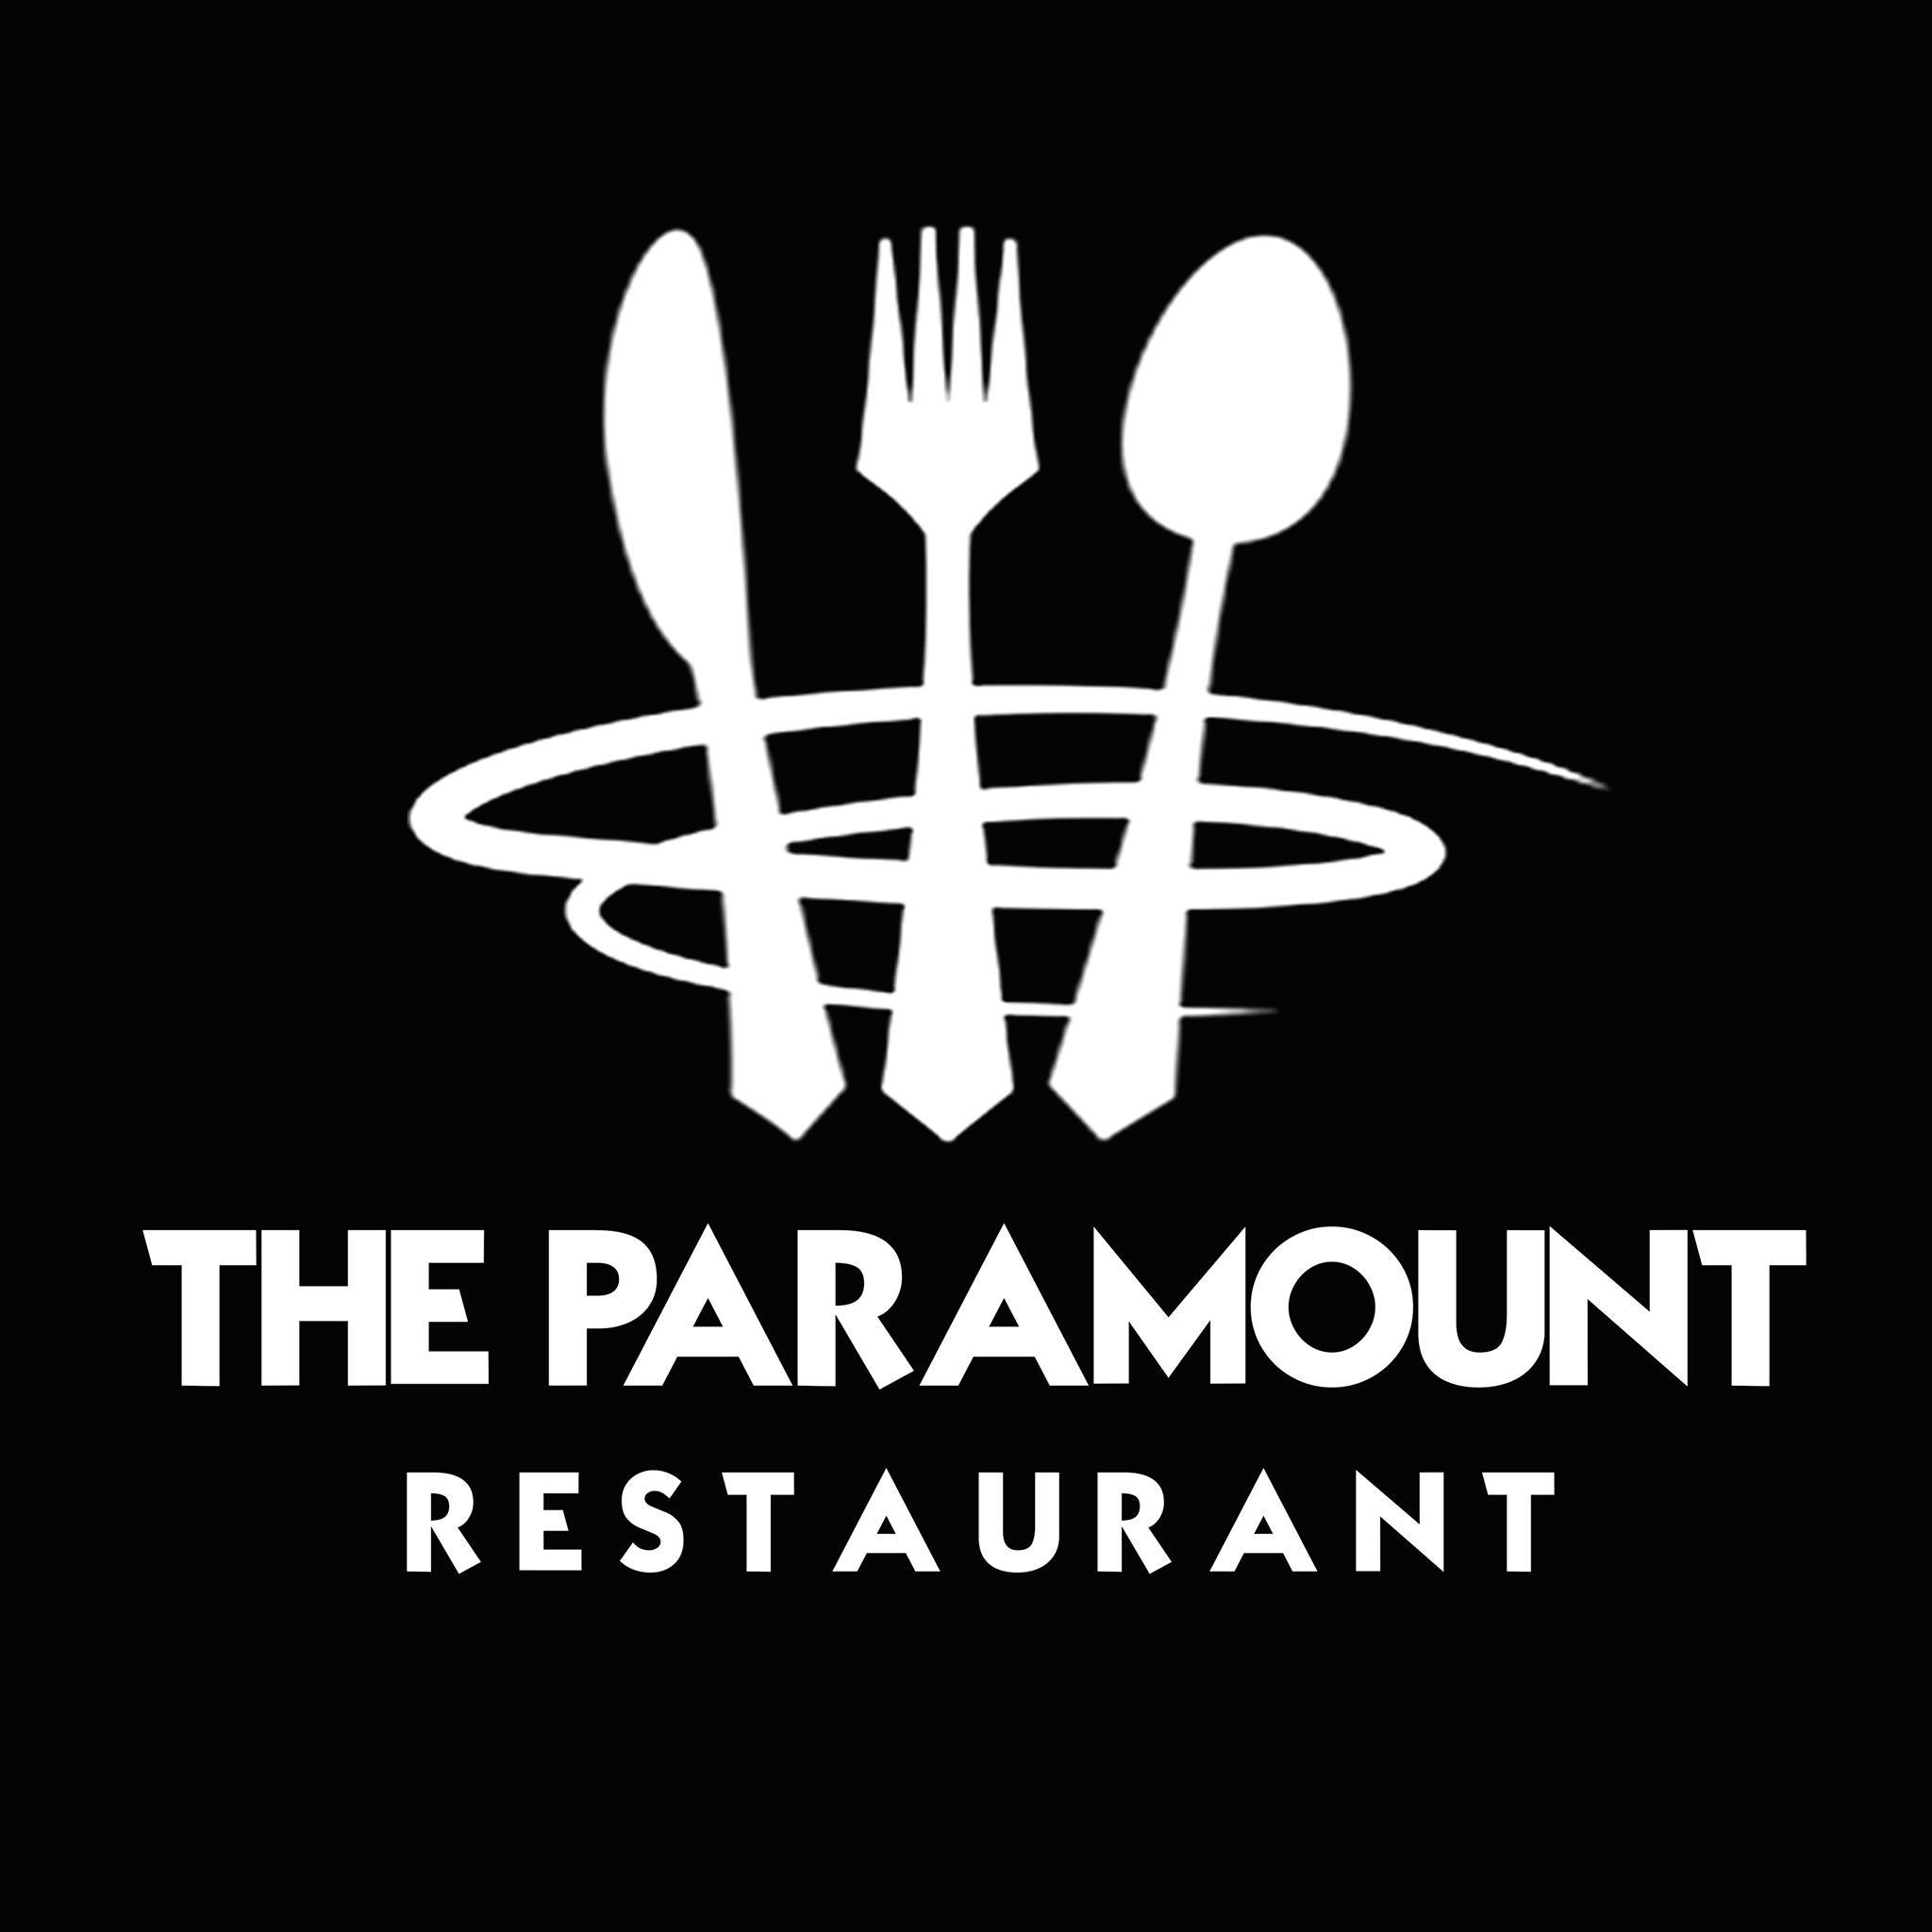 The Paramount Restaurant (pvt) ltd